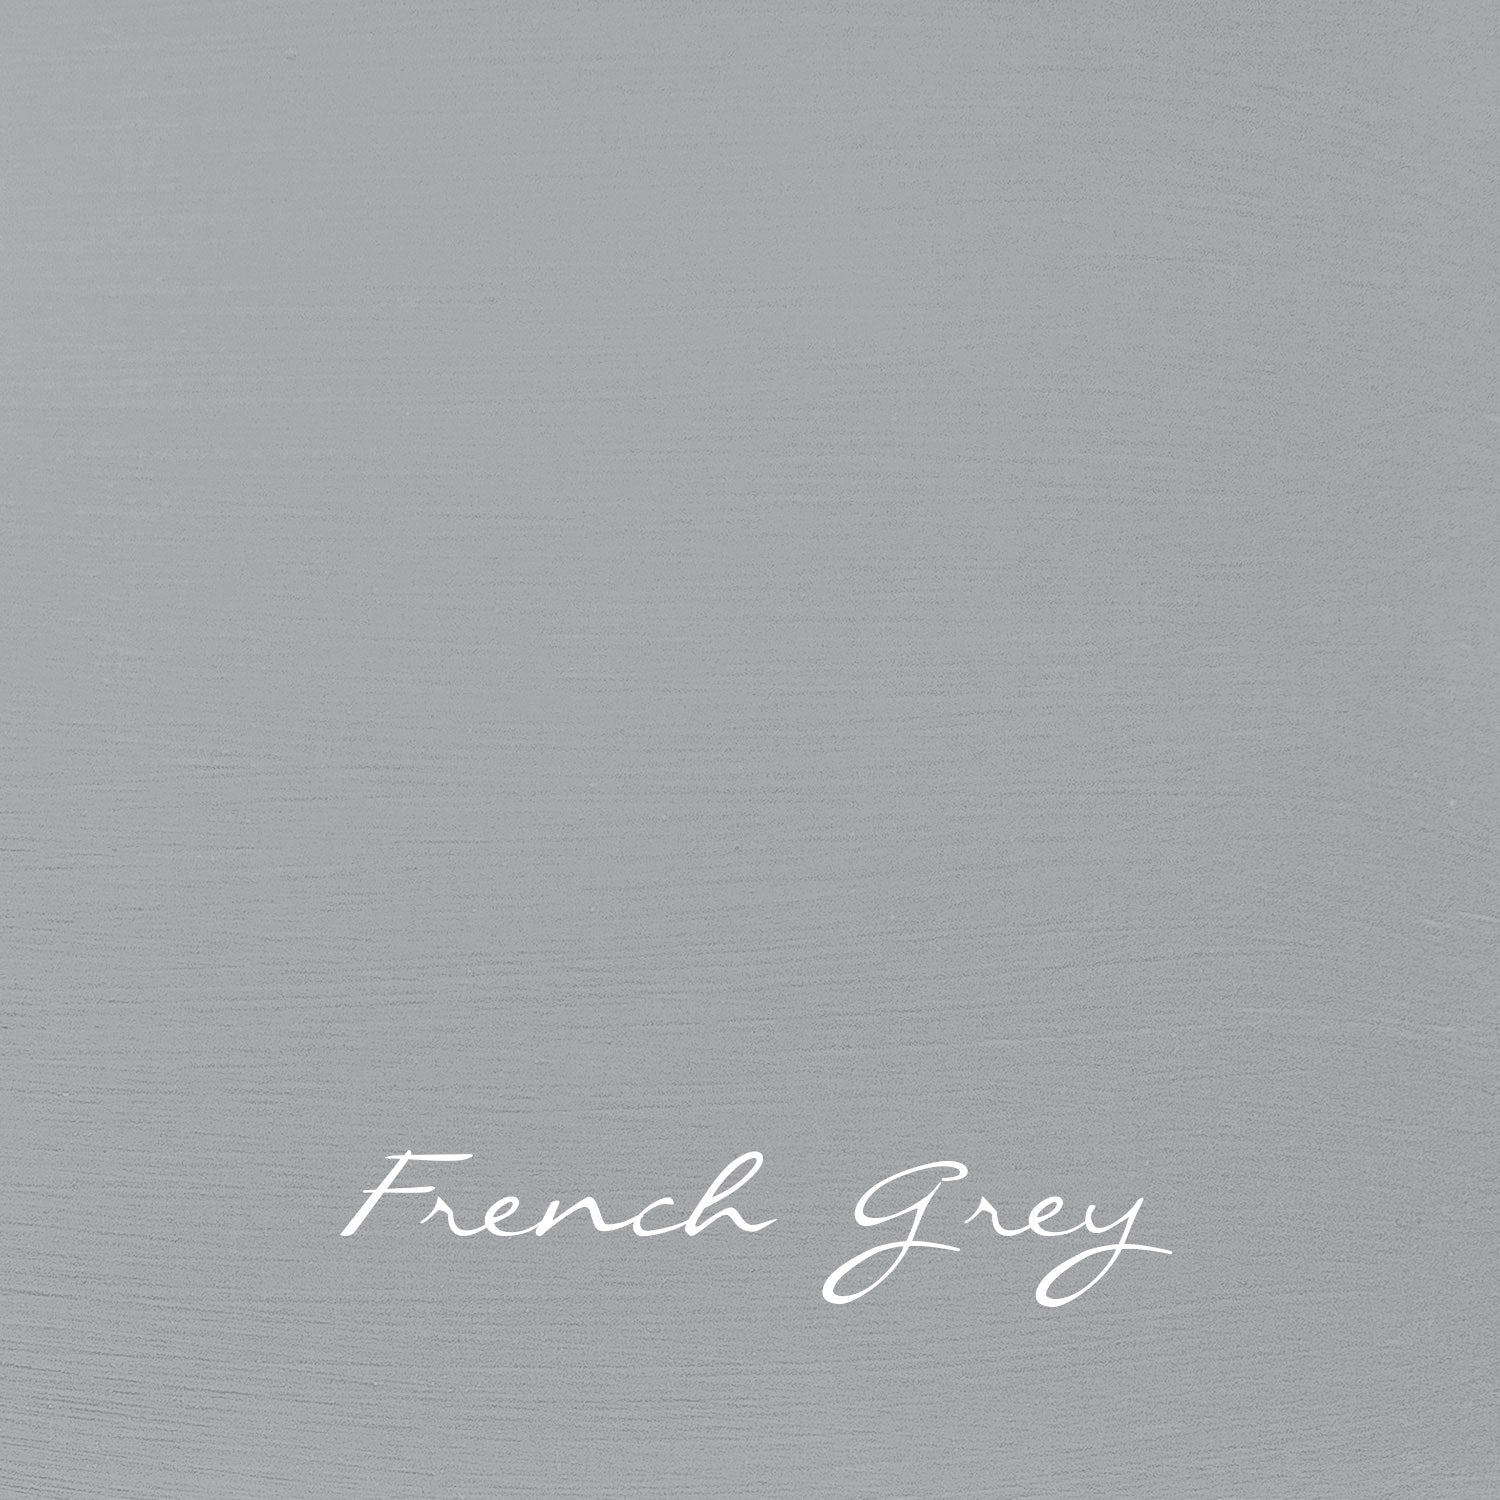 Vintage French Grey